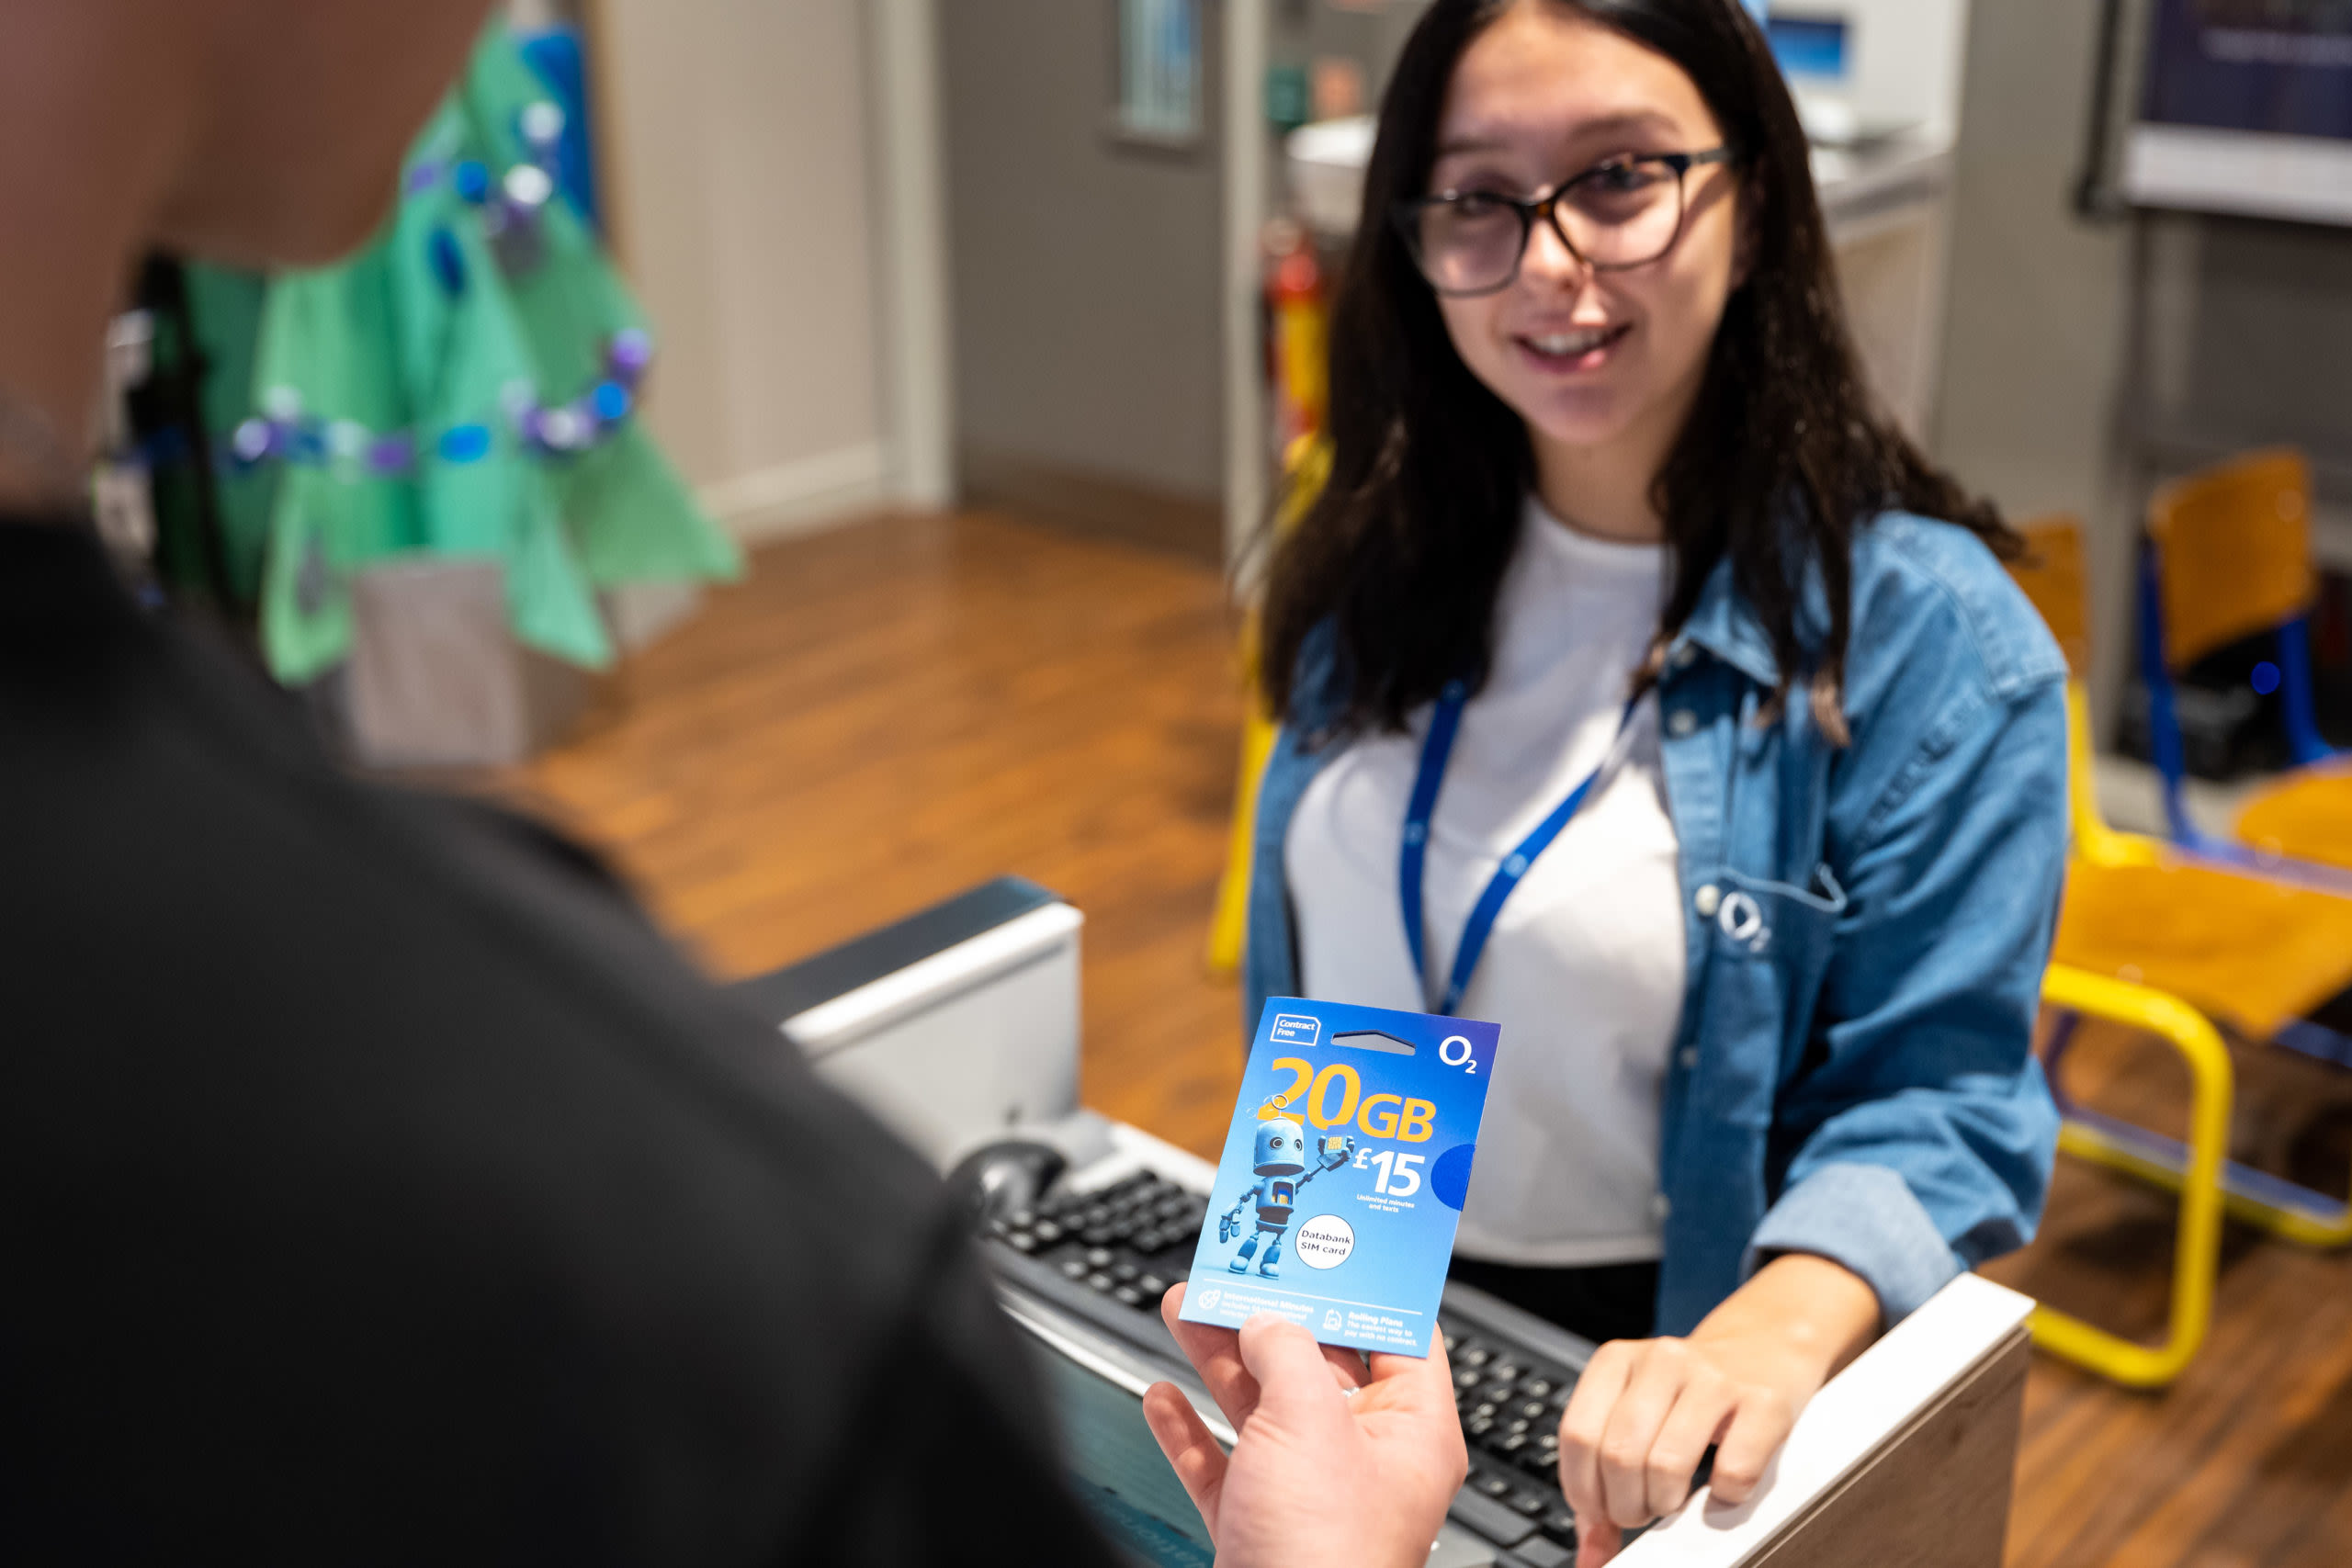 An O2 store employee handing a National Databank SIM card to a customer